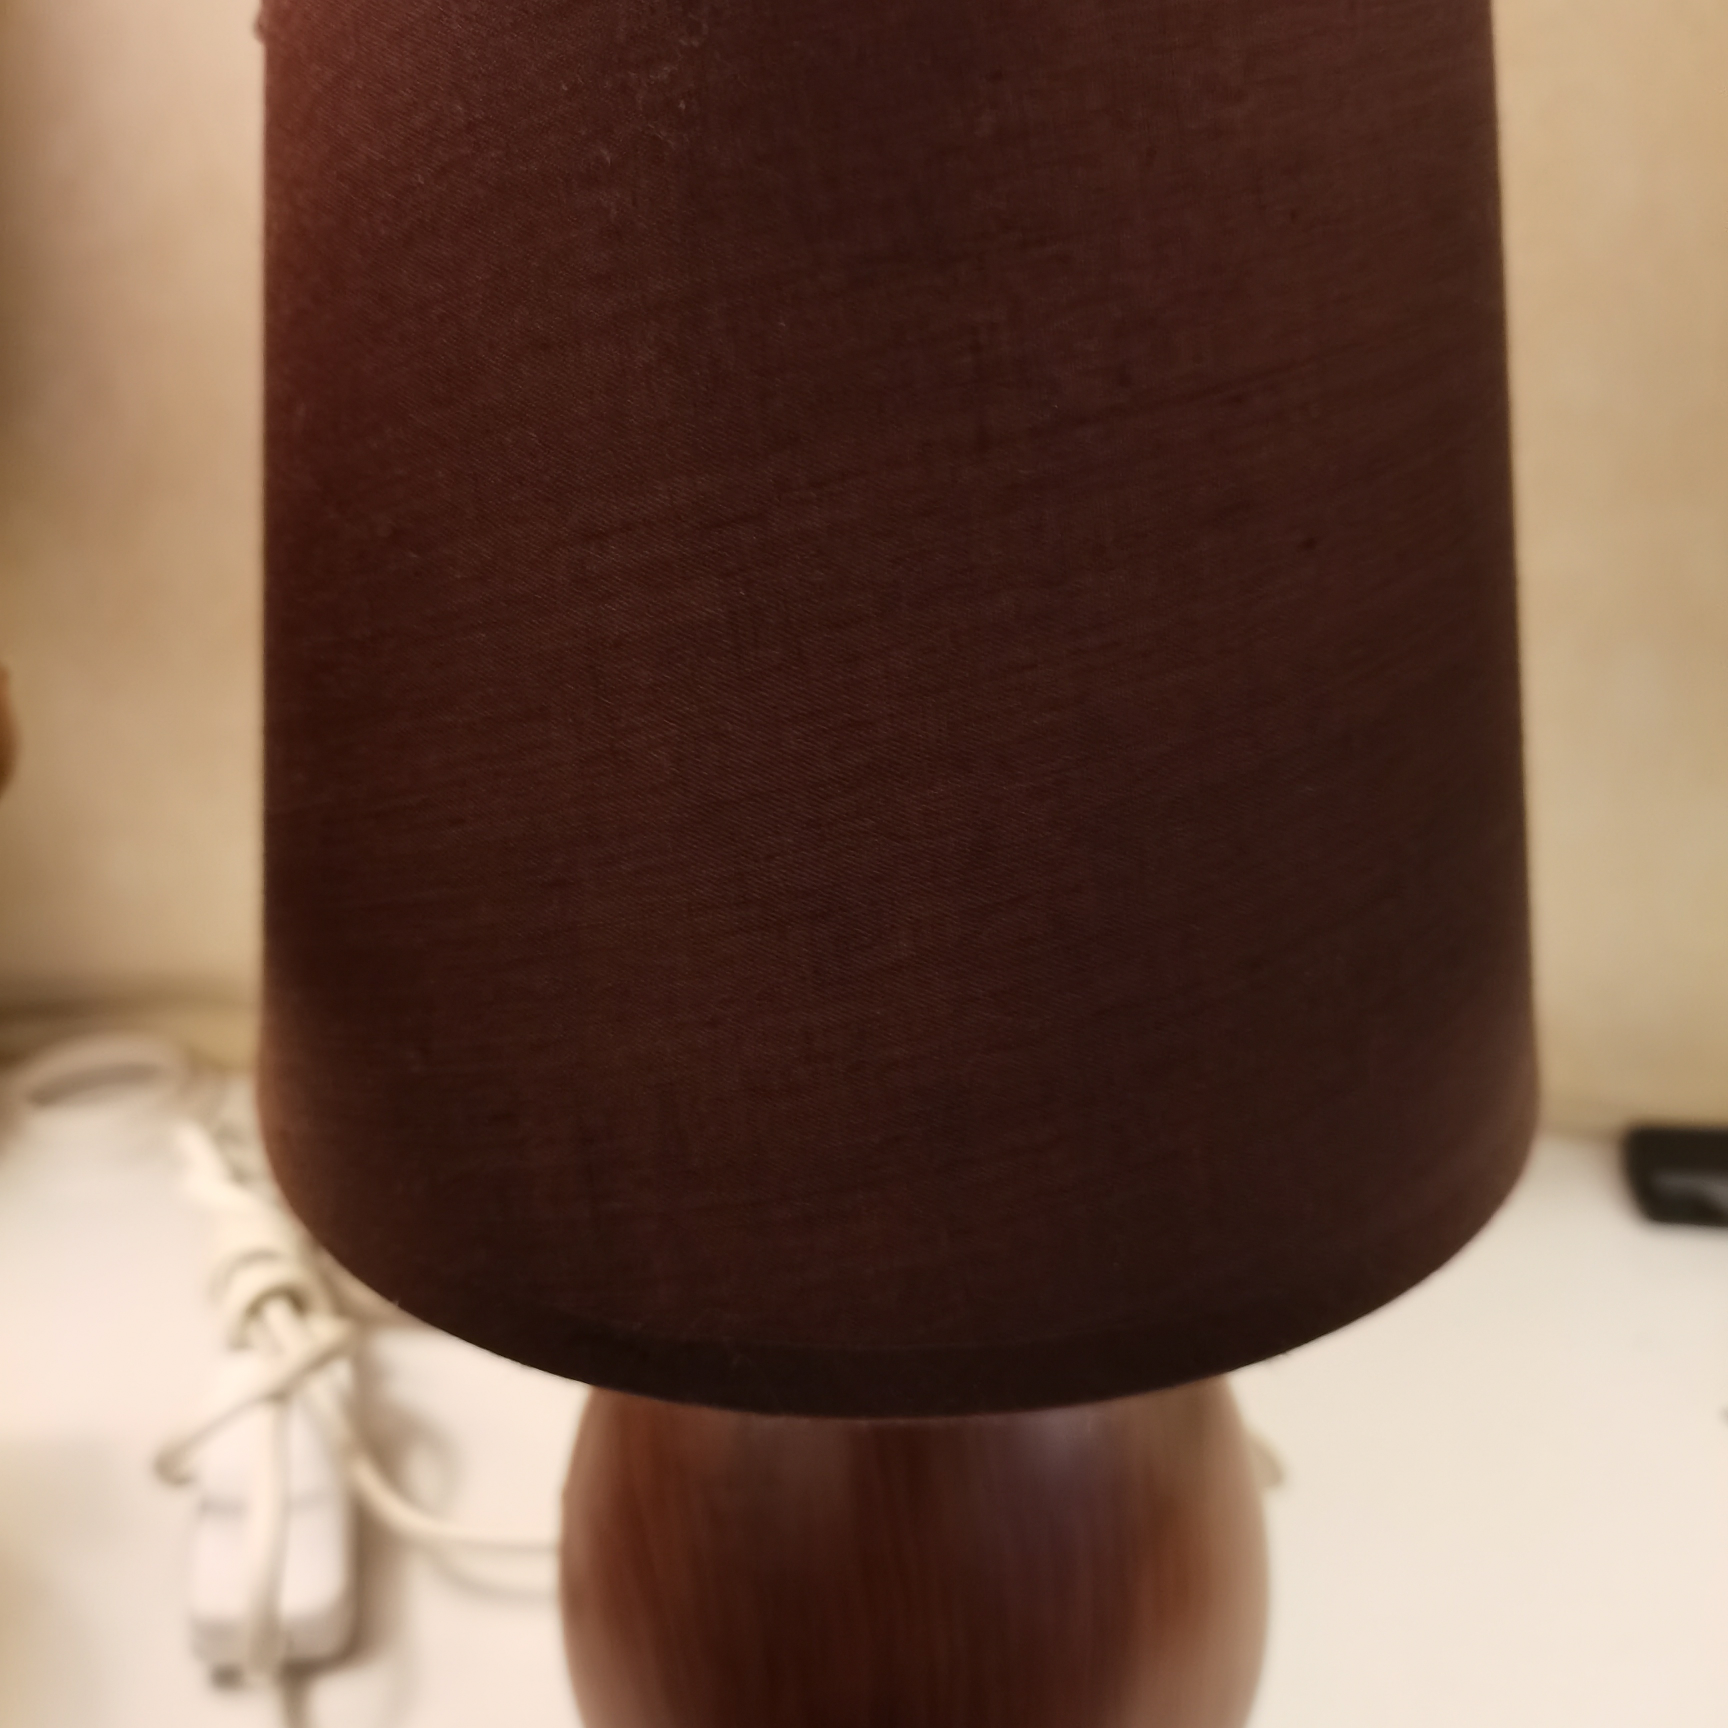 陶瓷26台灯 TABLE LAMP 棕色图